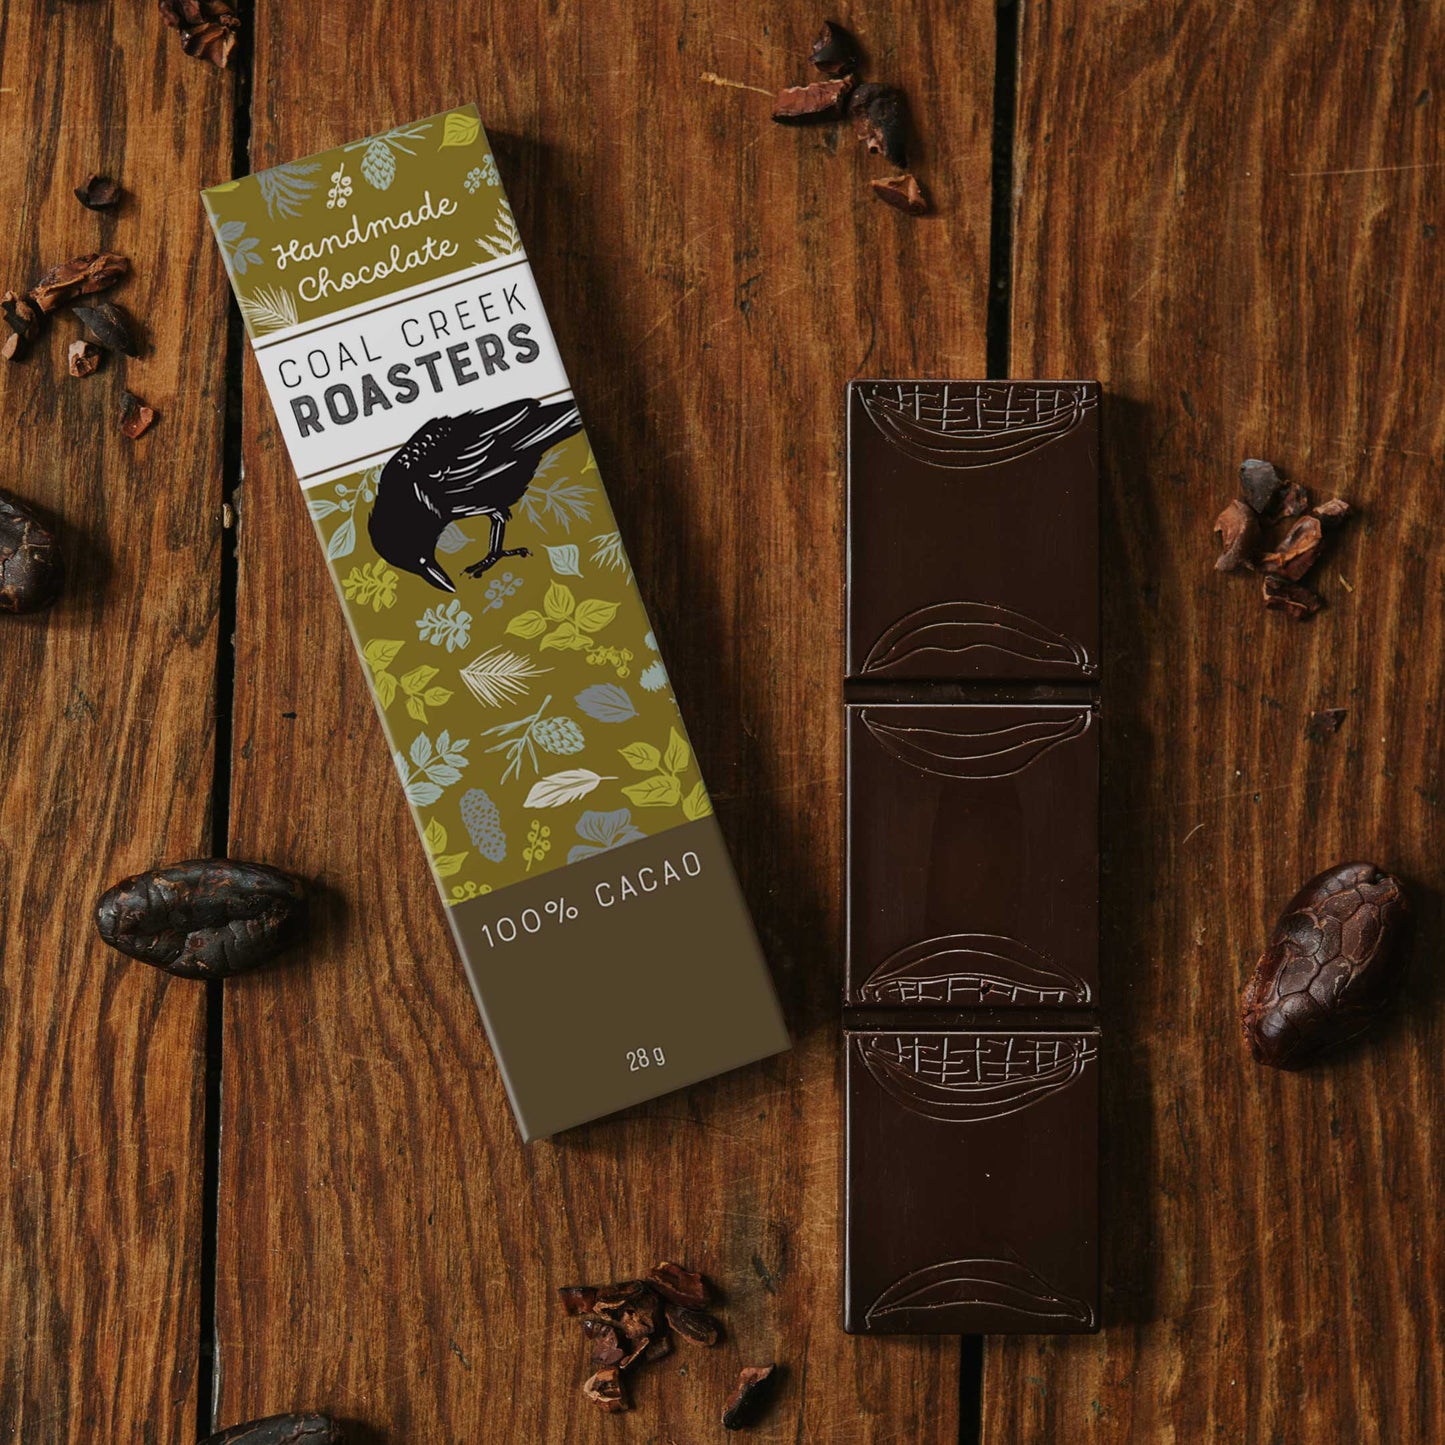 100% Dark Chocolate - Coal Creek Roasters (28g & 100g) - BCause